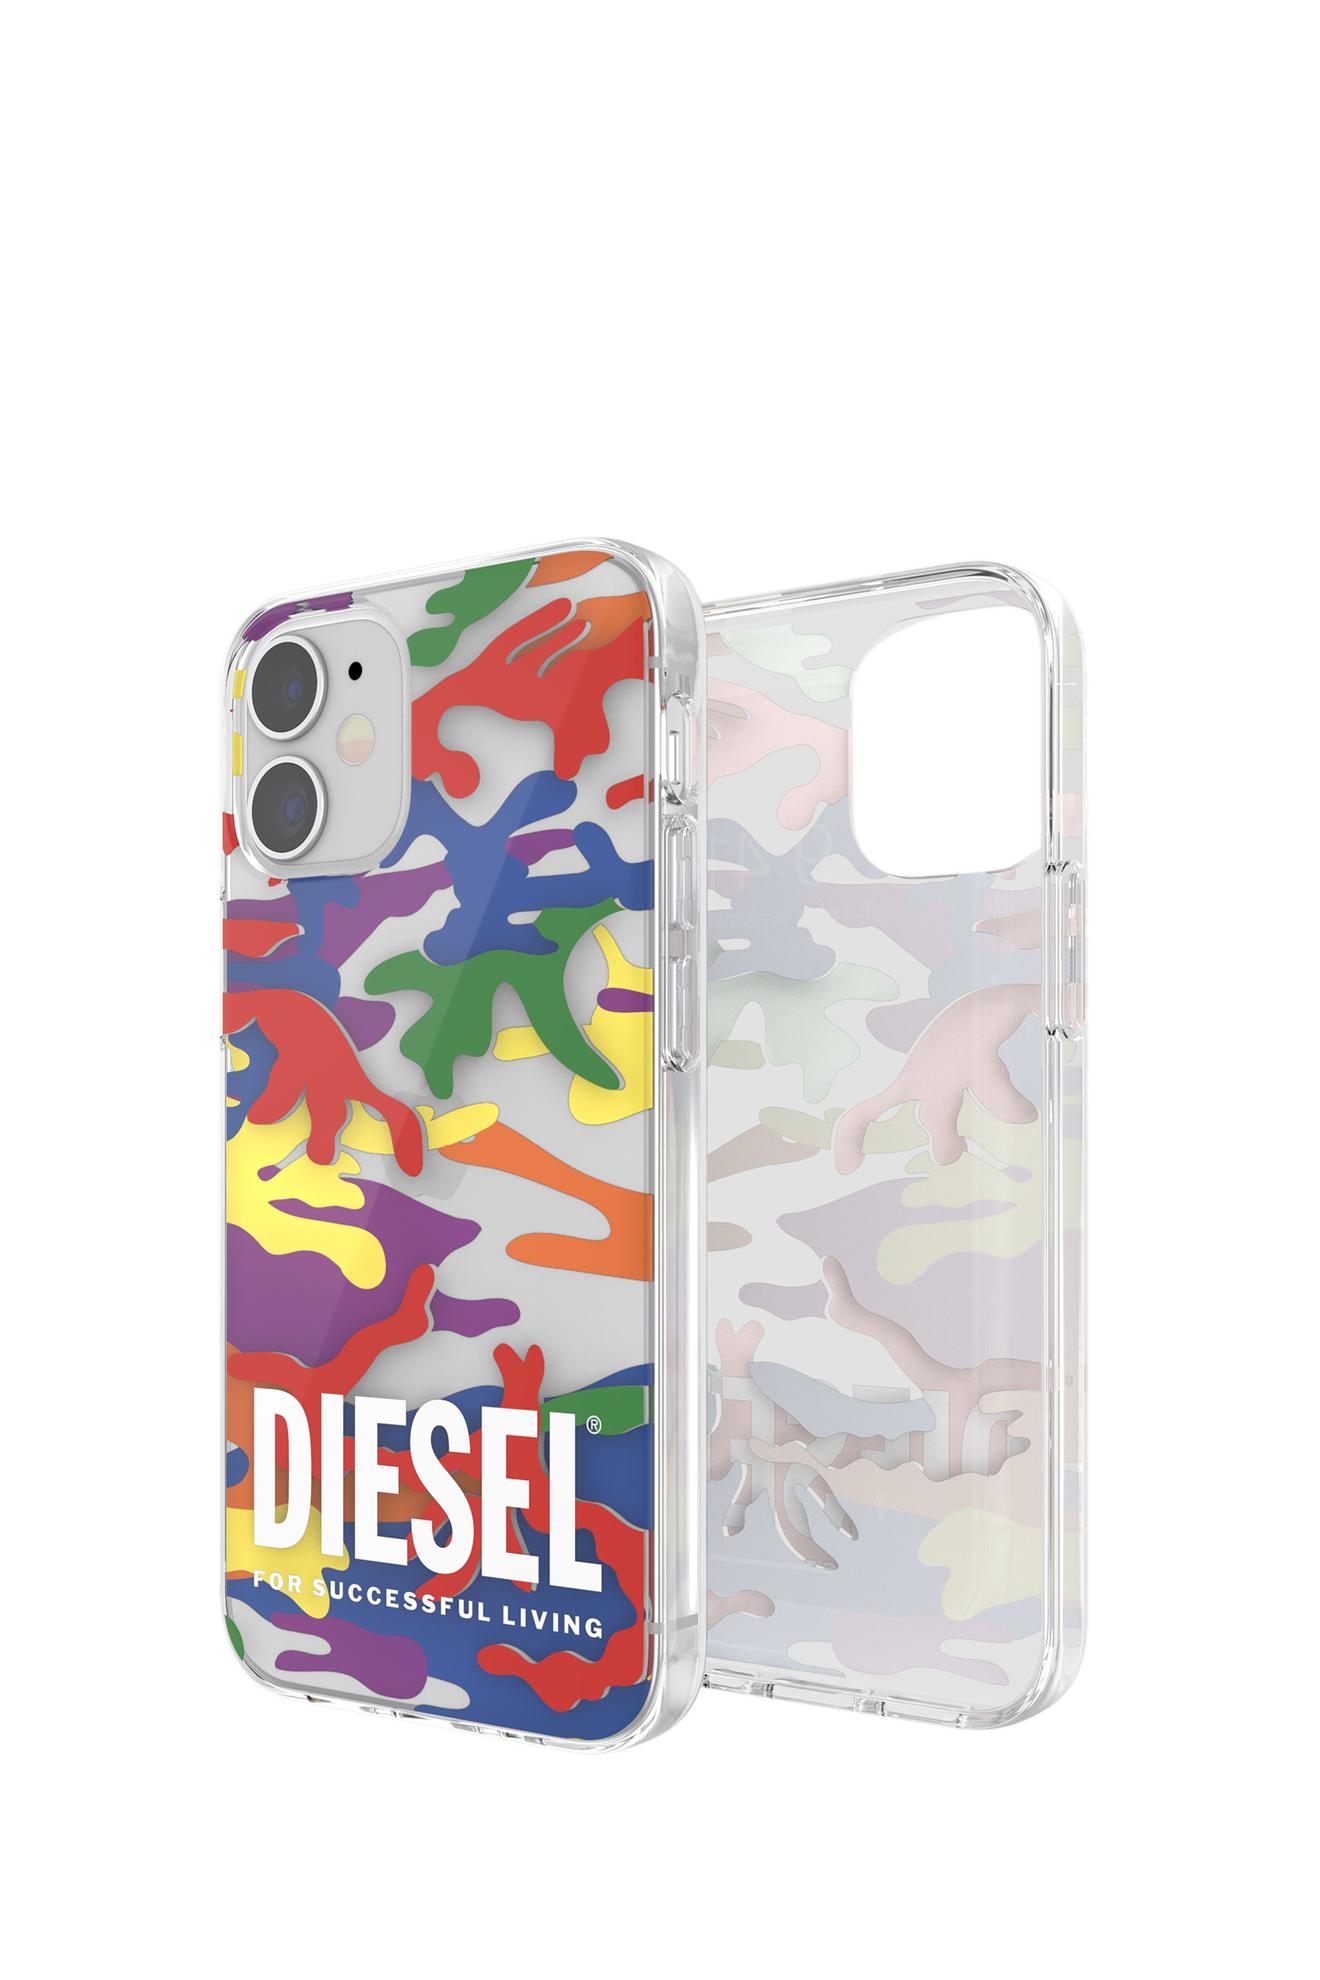 Aanbieding van Clear case Pride for iPhone 12 mini voor 21€ bij Diesel